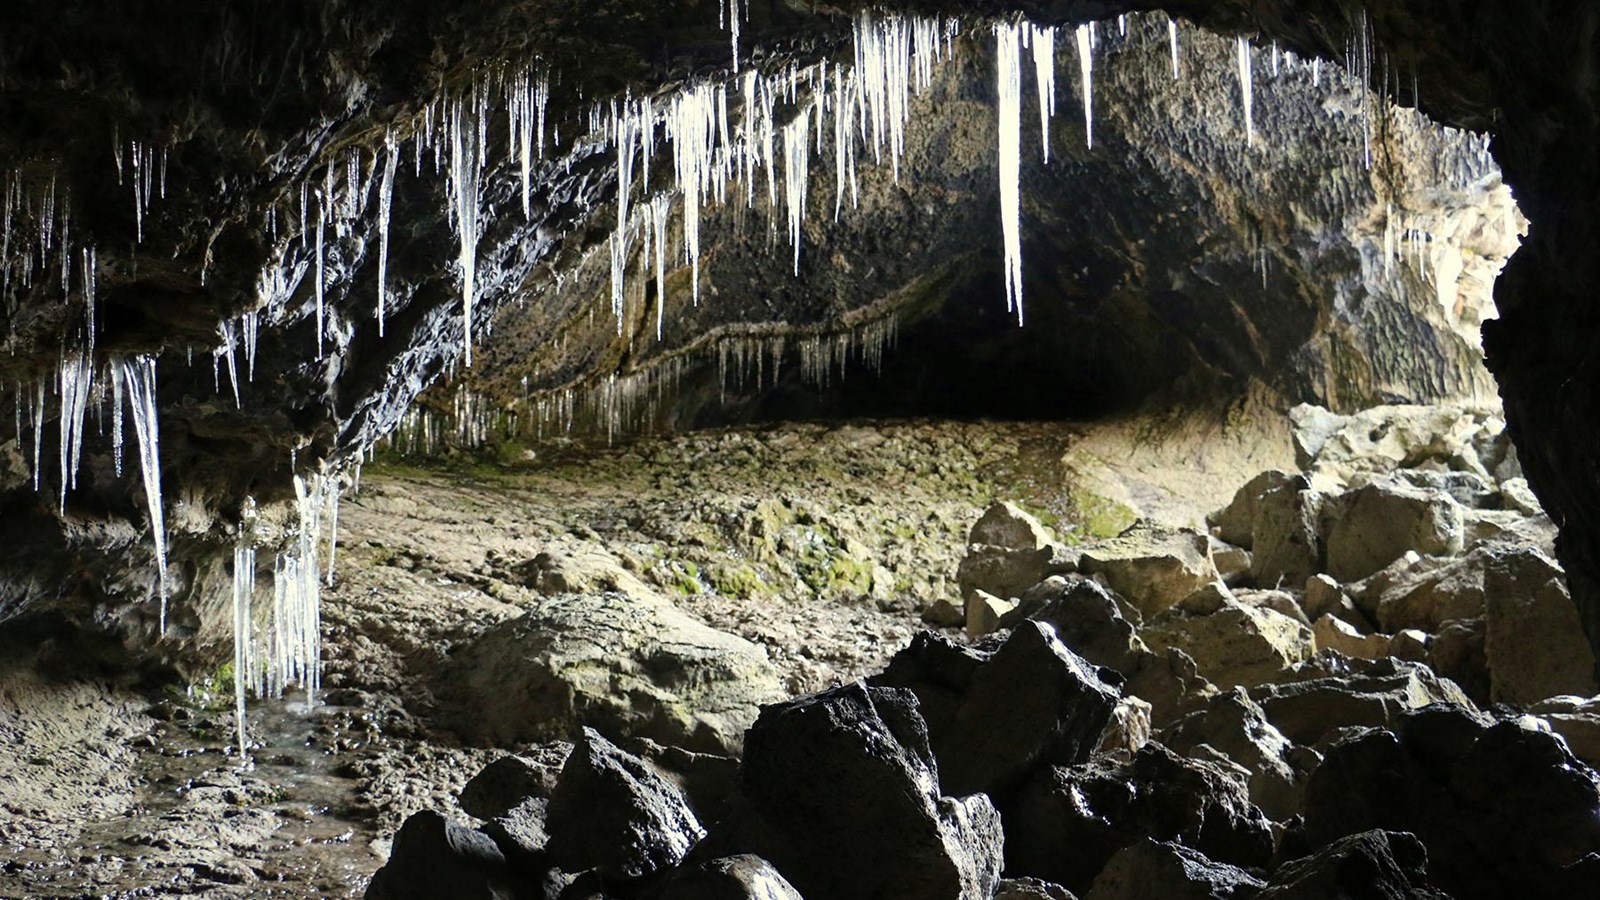 Hercules Leg Cave entrance